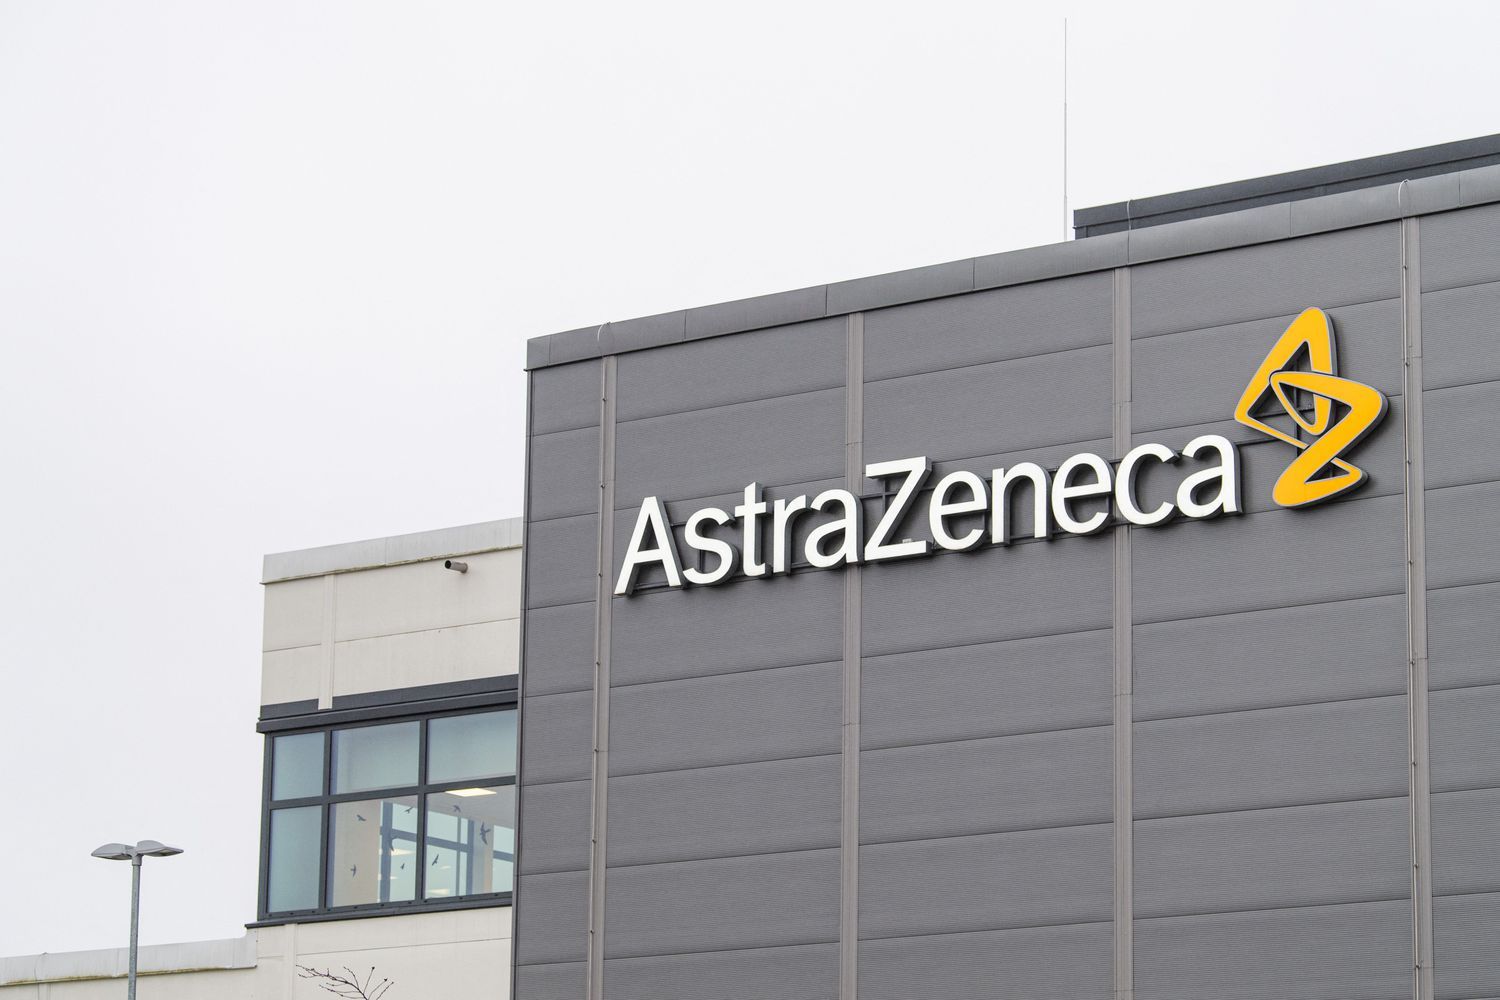 AstraZeneca makes Shanghai its fifth global strategic hub